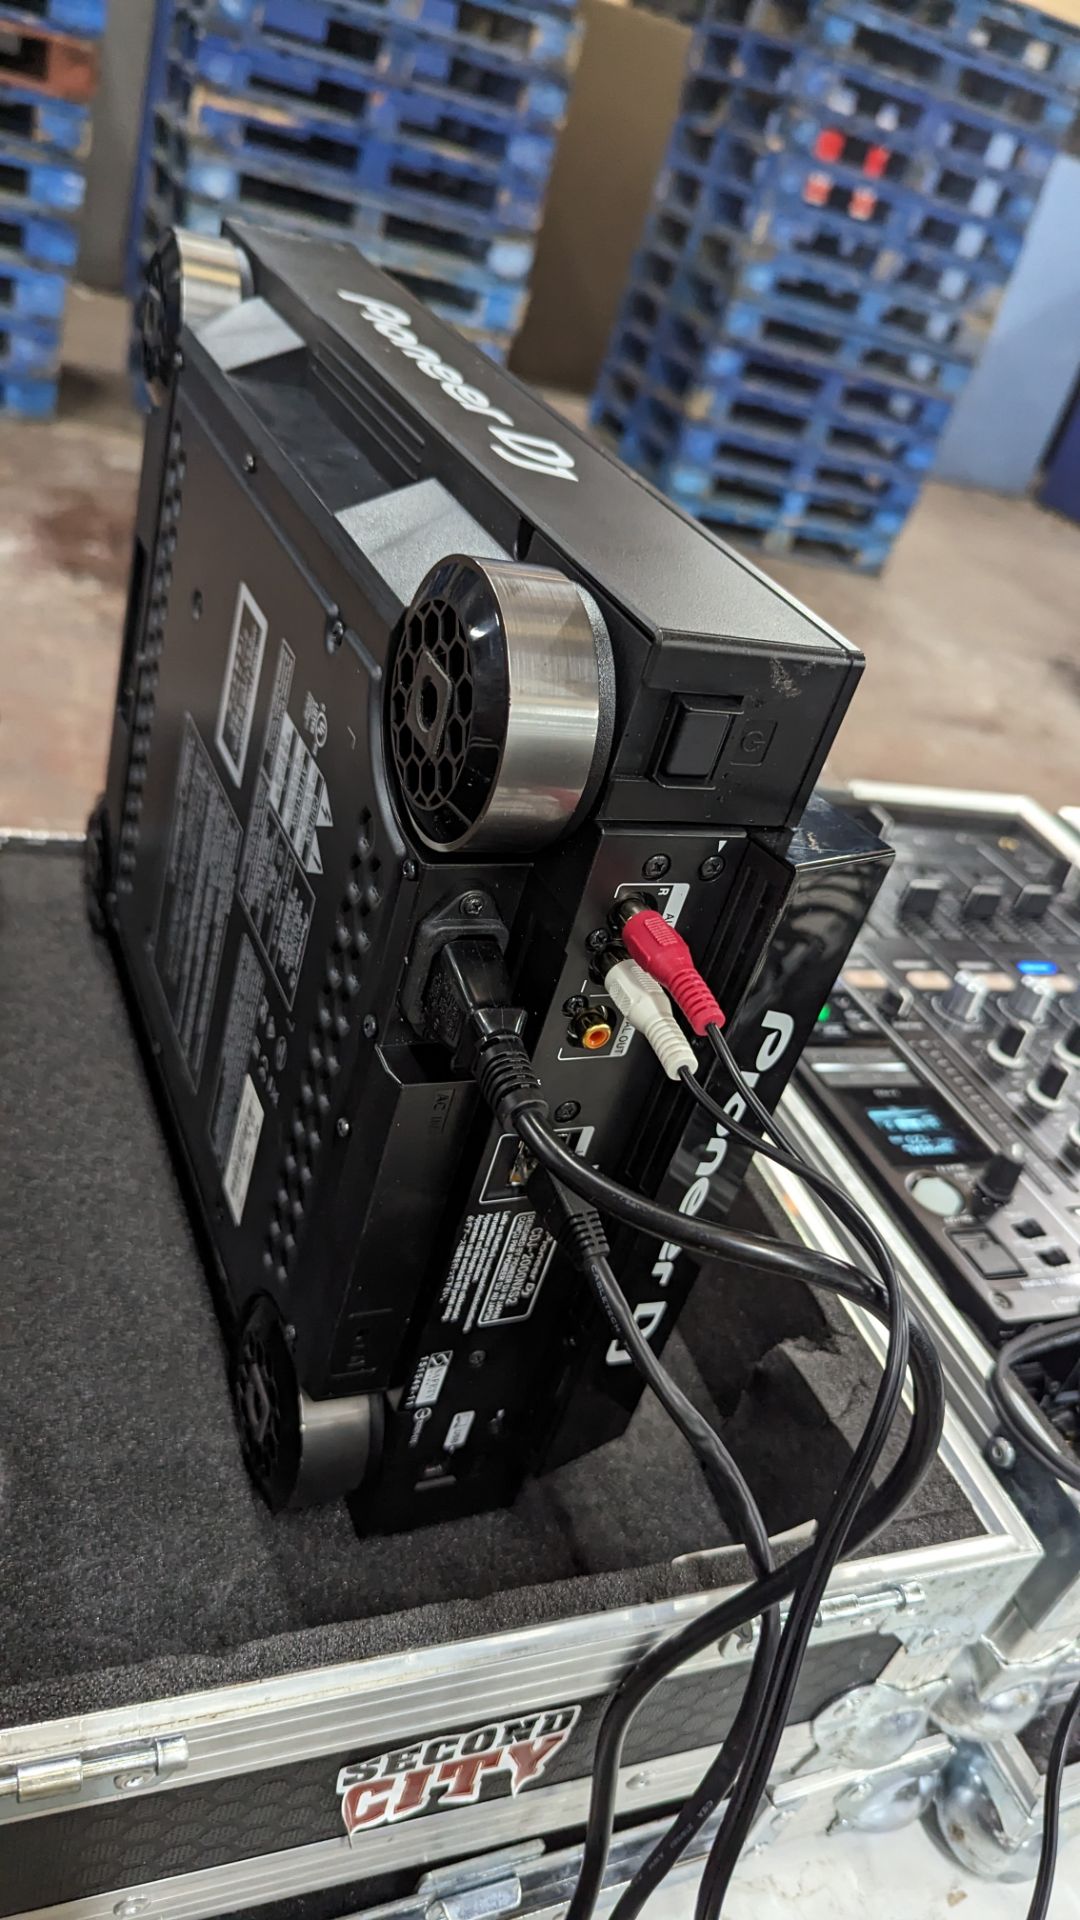 Pioneer Pro DJ package: DJM-900NXS2 Mixer & 2x DJM-900NXS2 multi players - Image 25 of 55